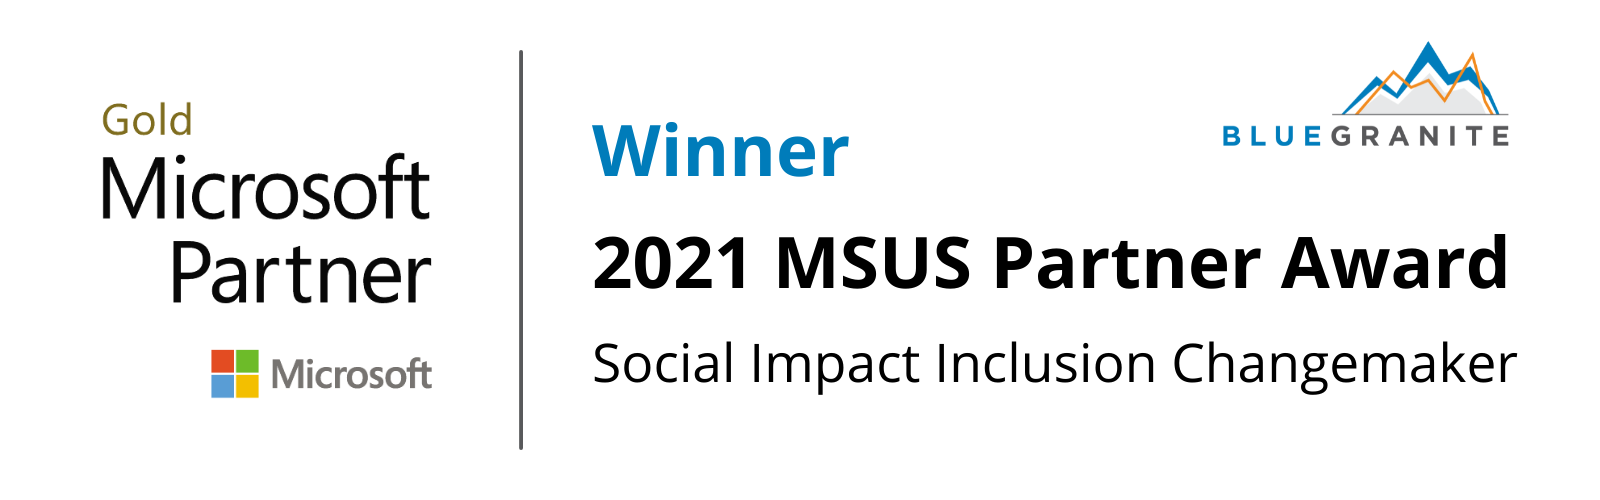 2021 MSUS Partner Award - Inclusion Changemaker